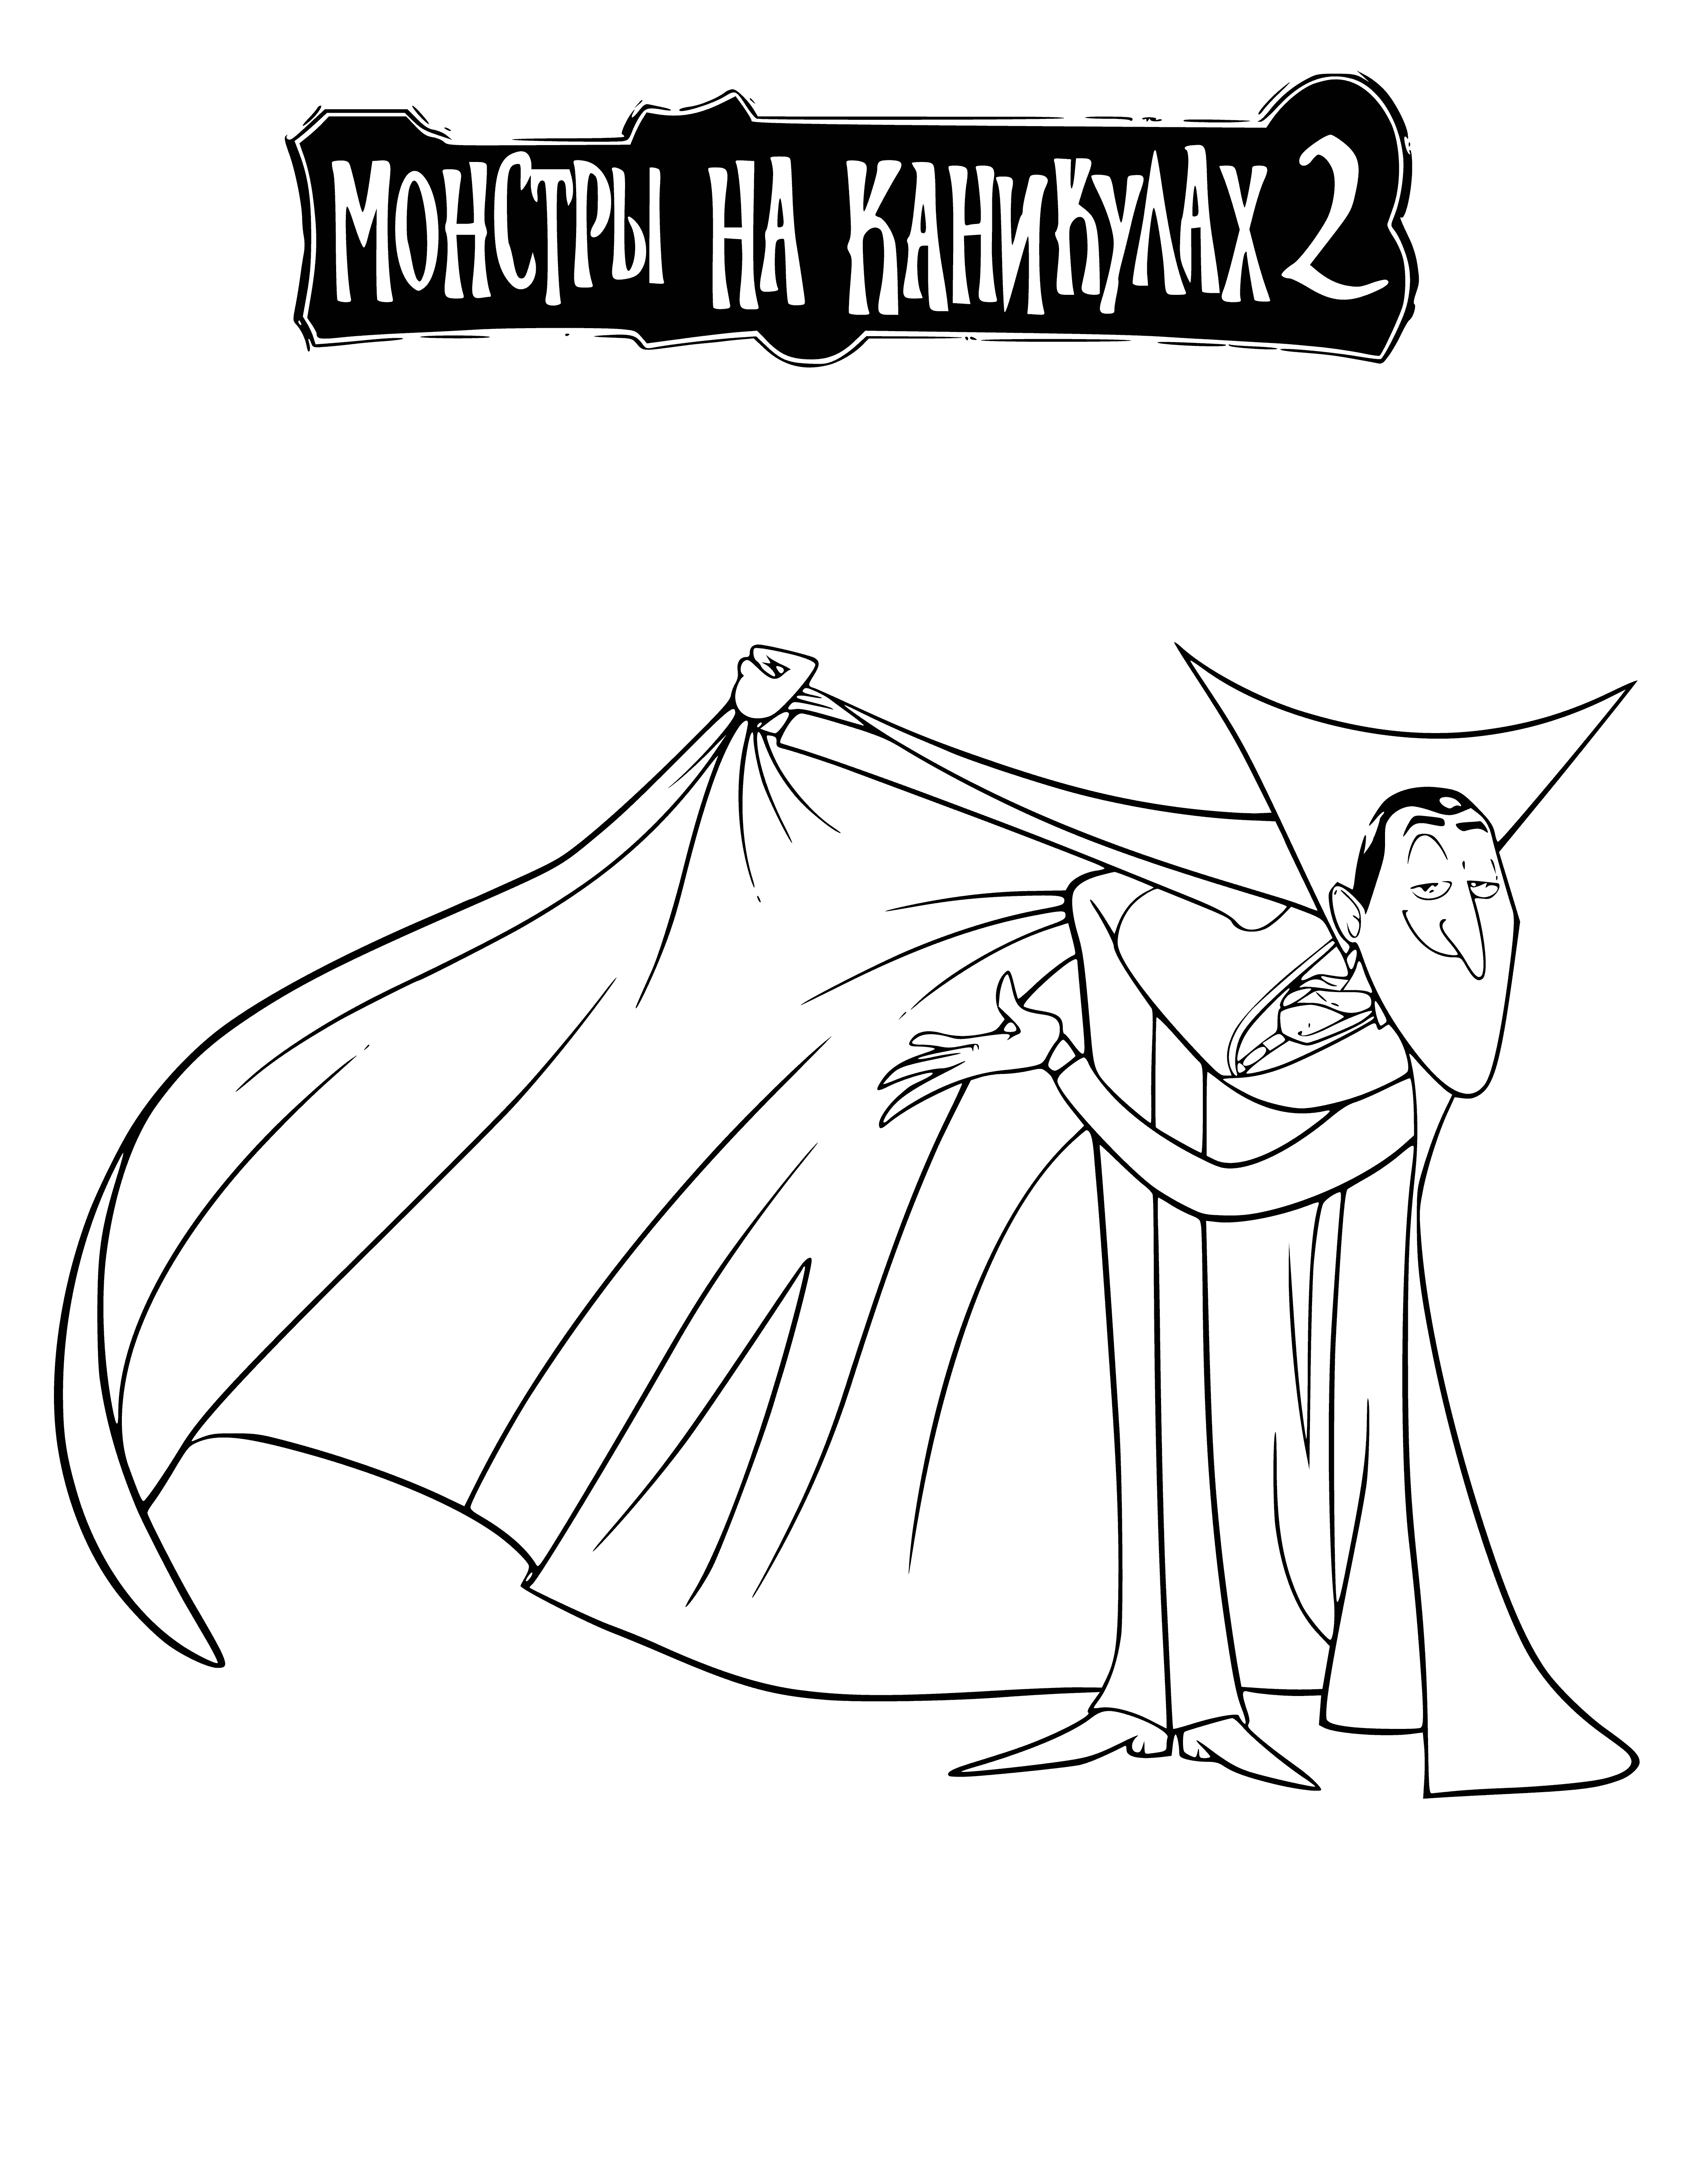 Dracula coloring page